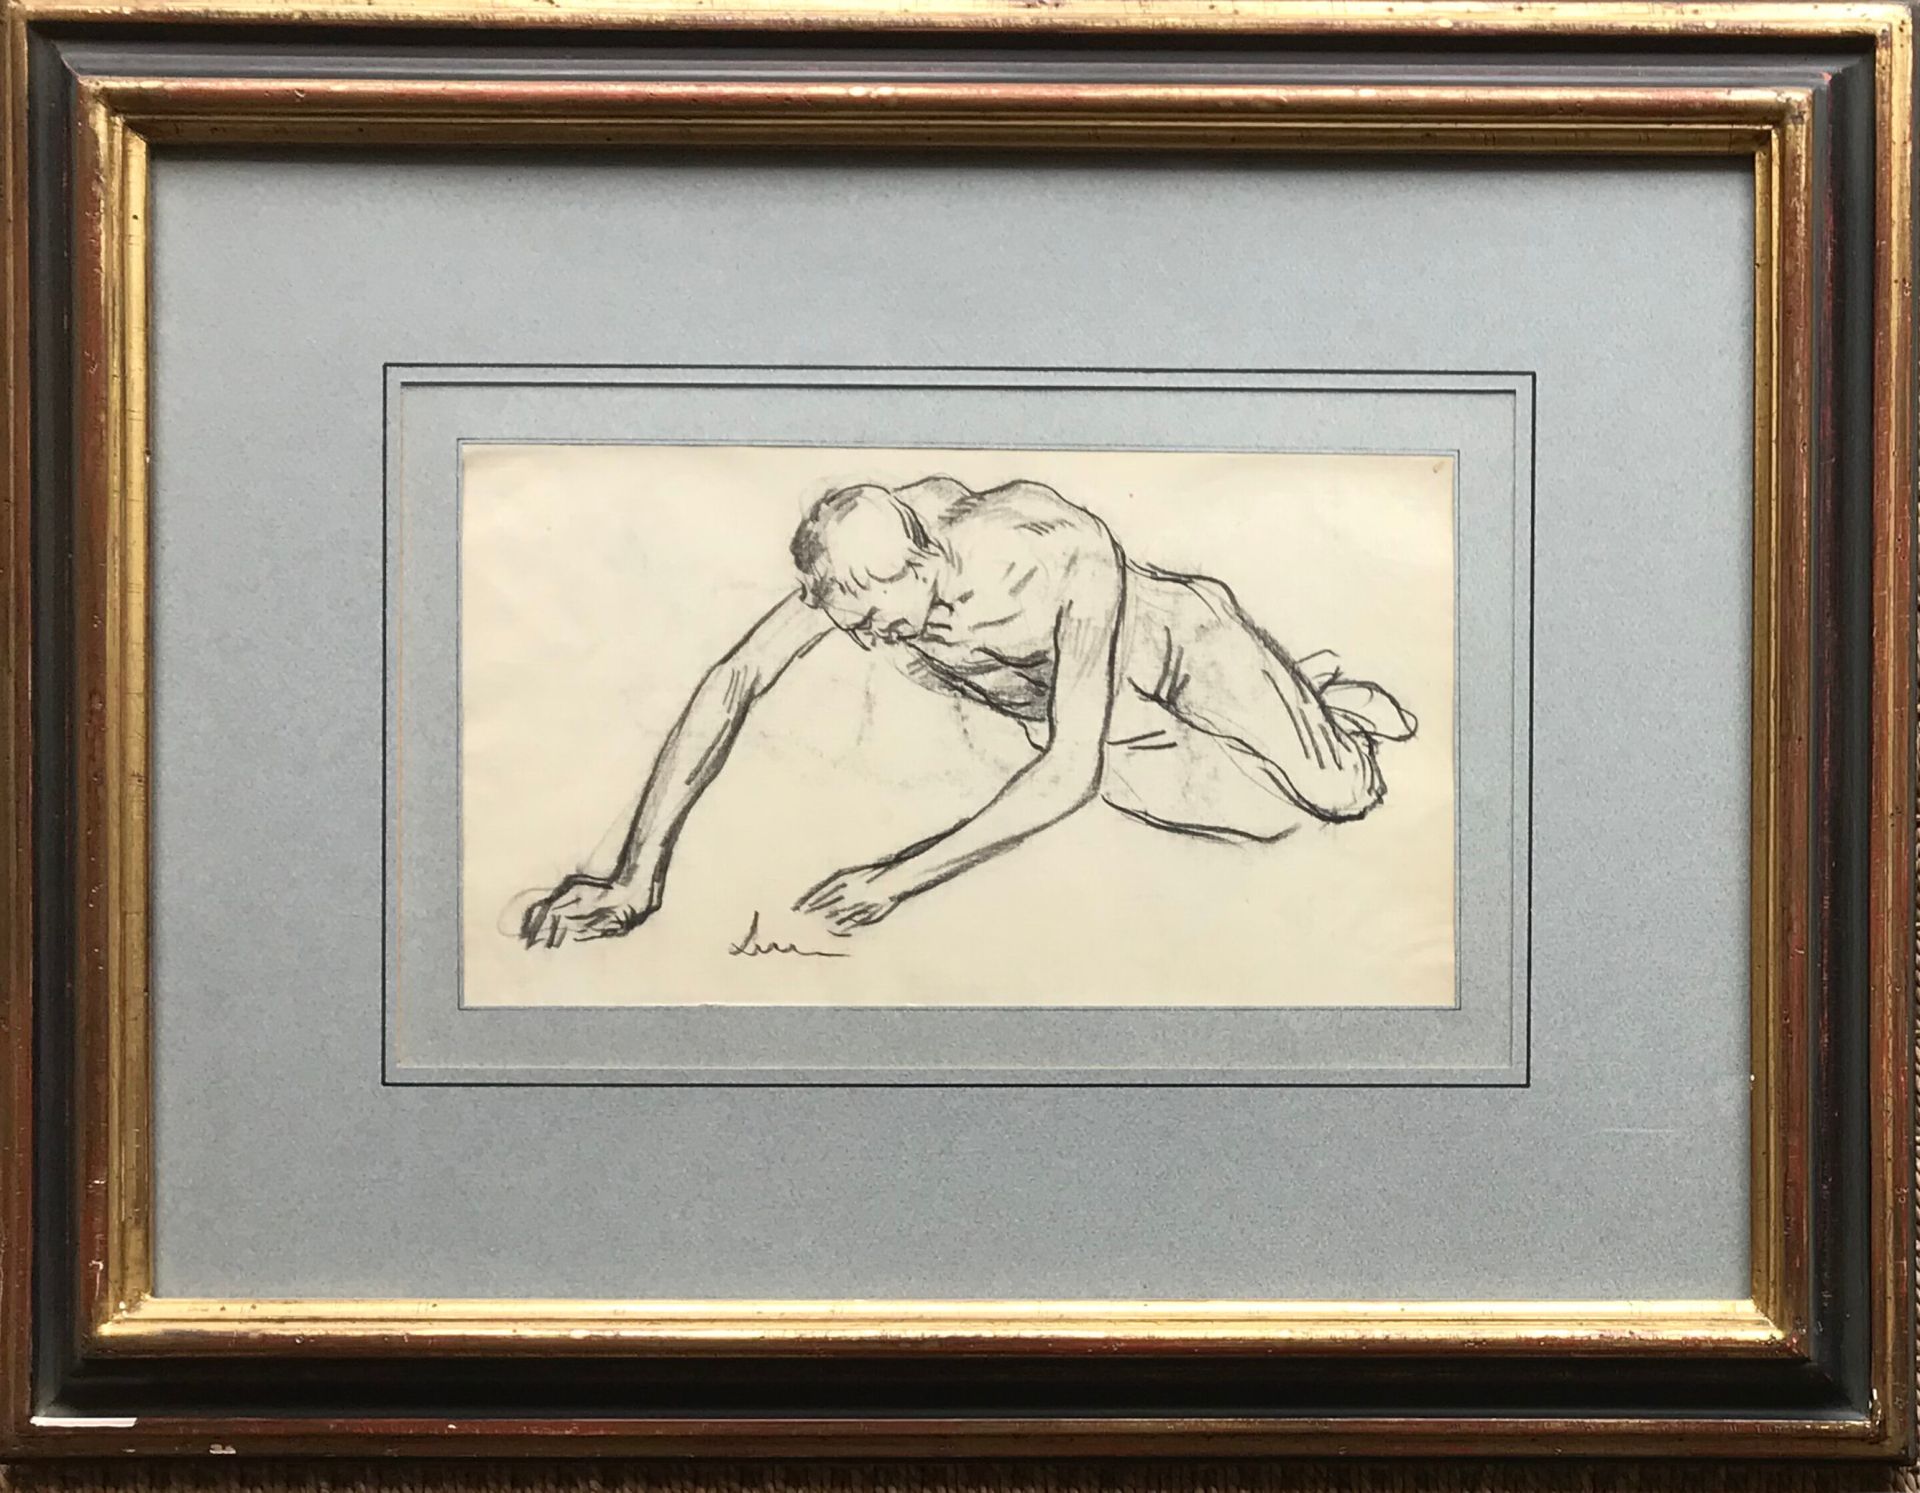 Maximilien Luce Maximilien LUCE (1858-1941)

Estudio de un hombre

Dibujo a carb&hellip;